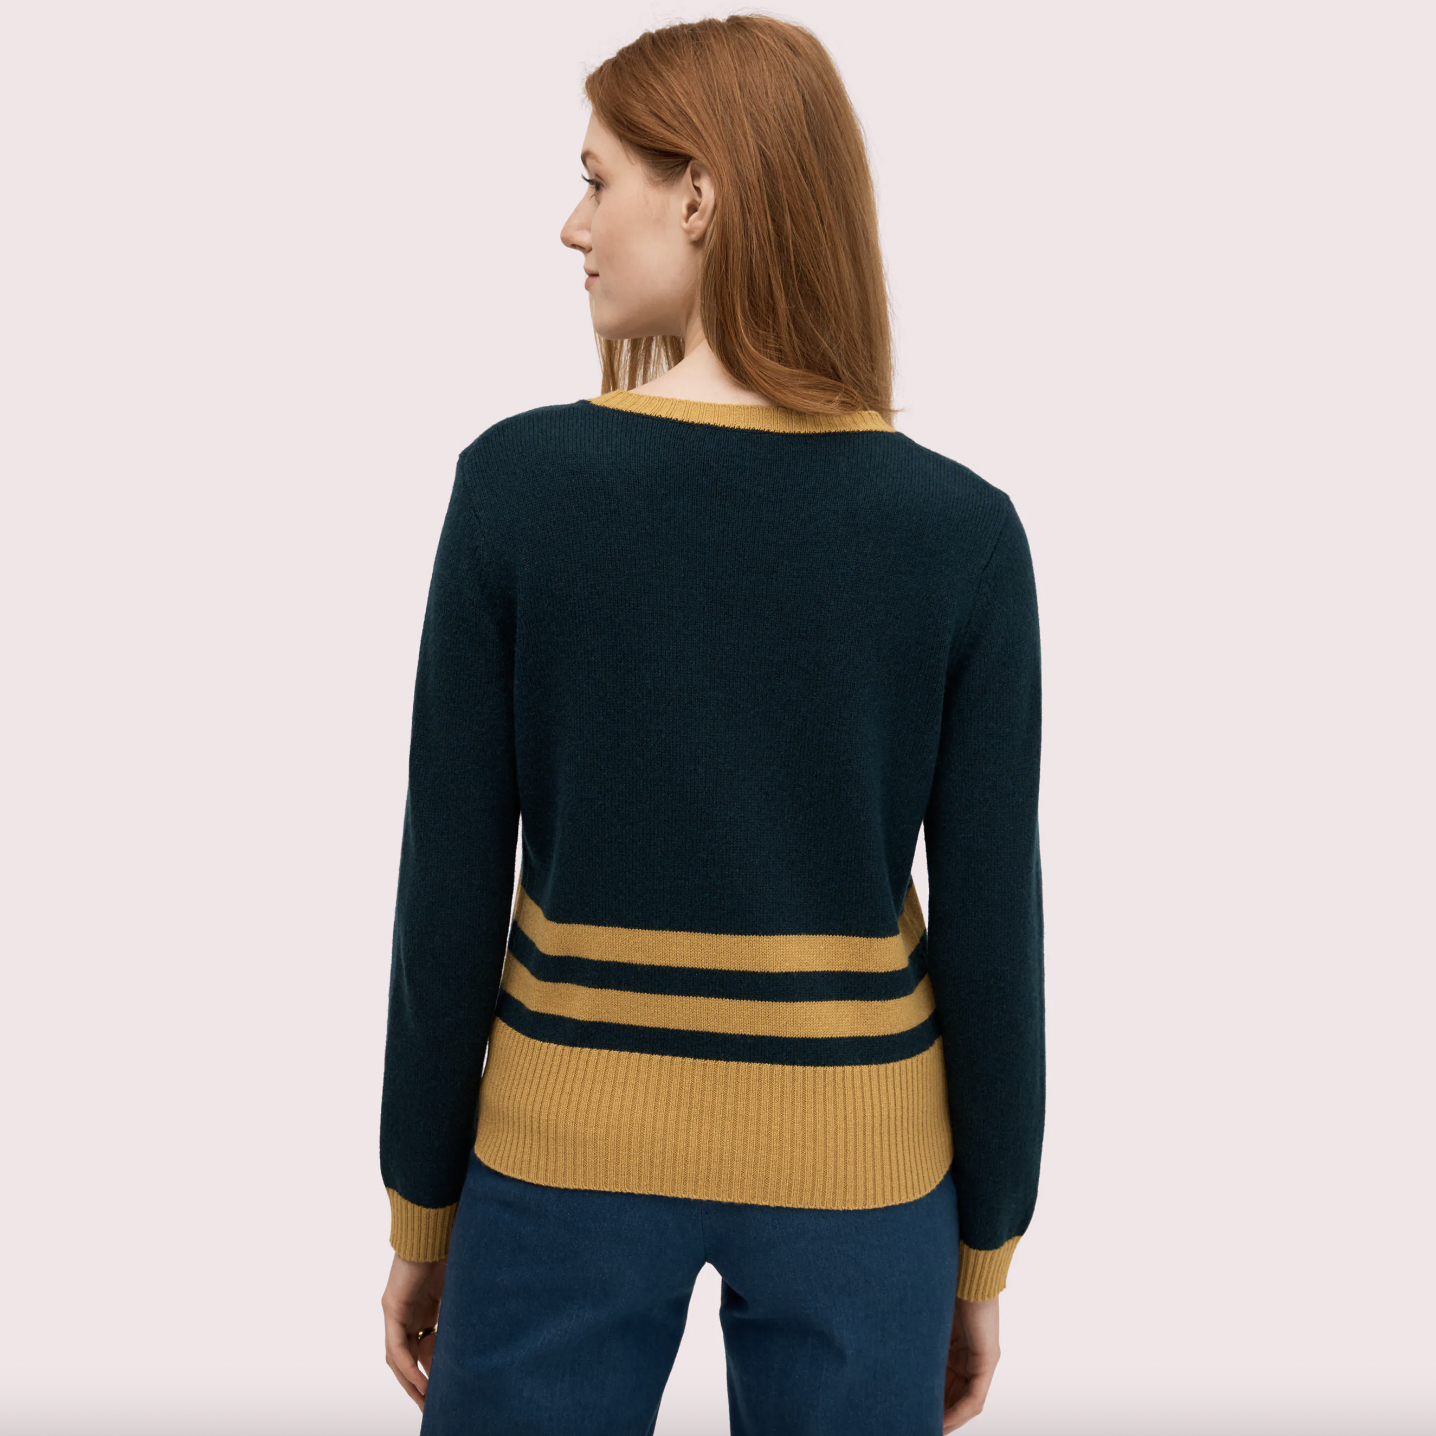 kate spade disco naps wool-blend sweater - size medium